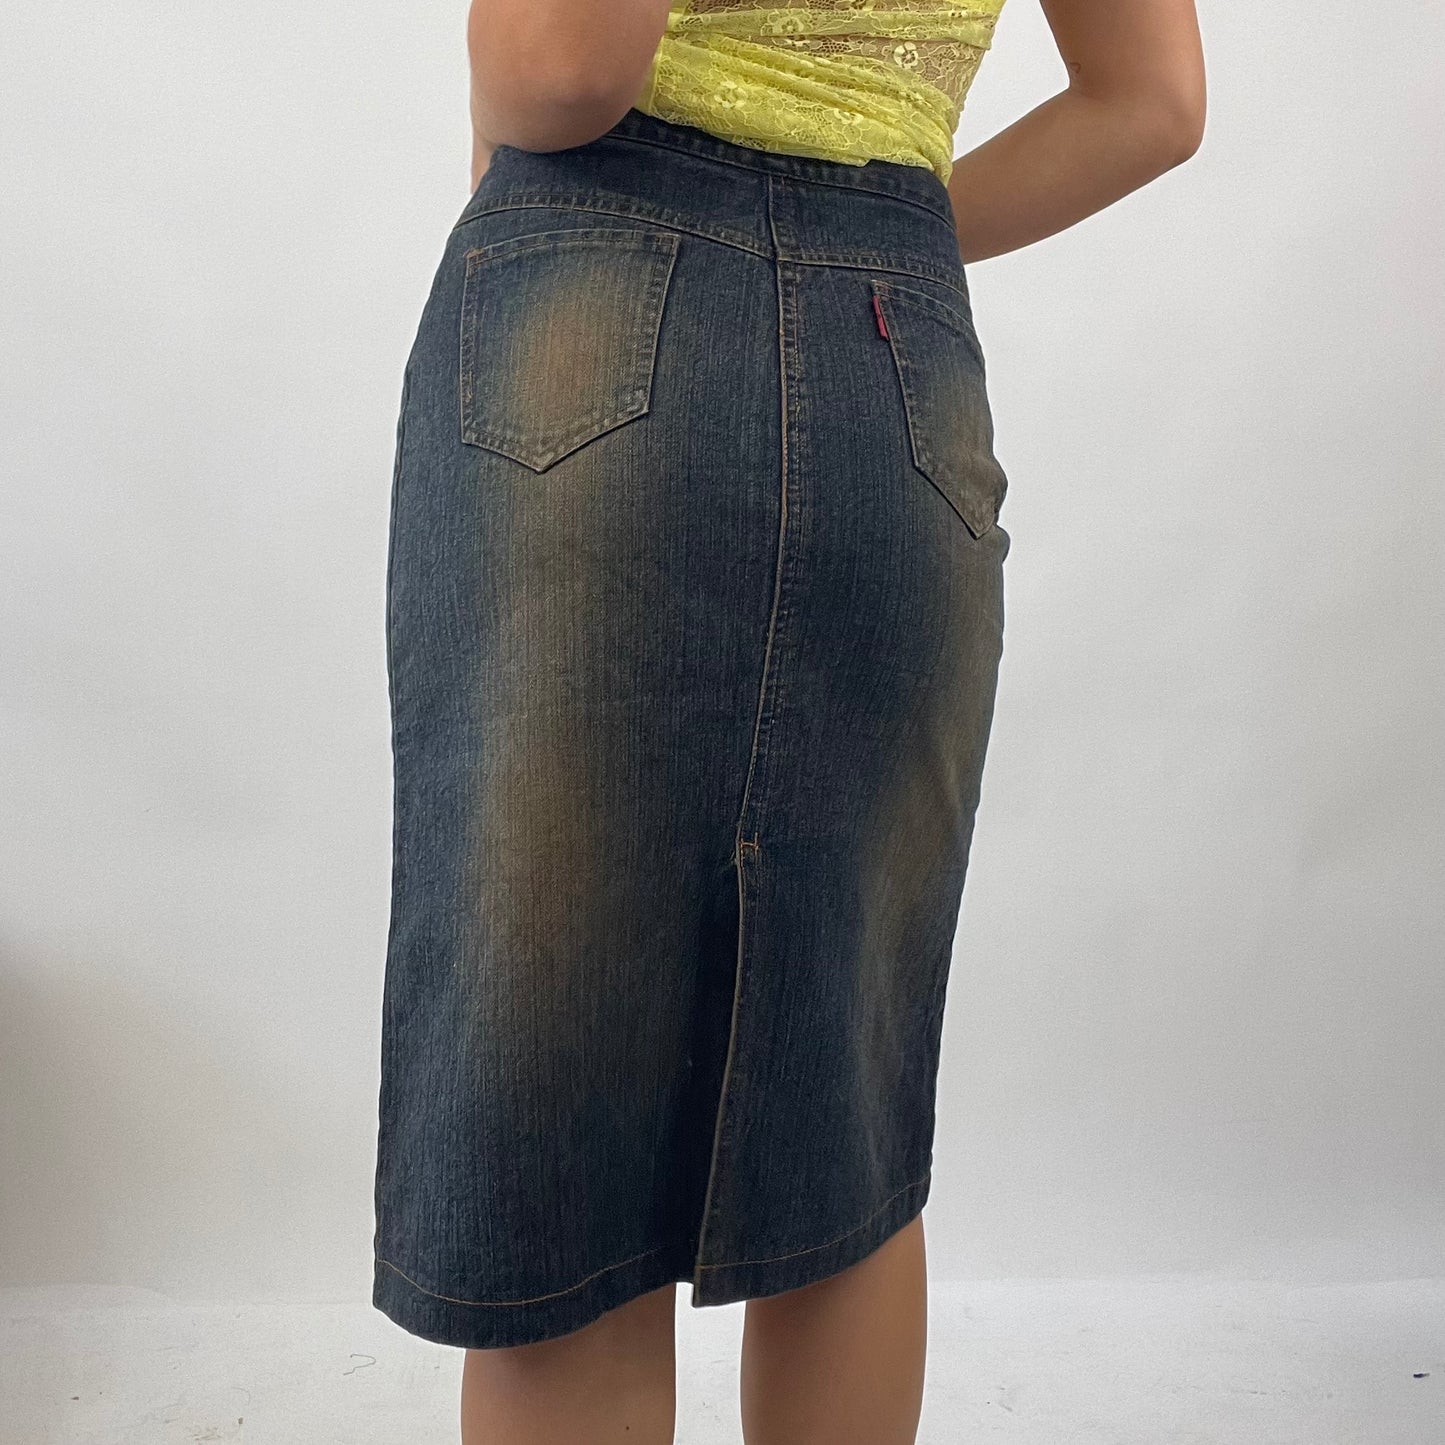 VINTAGE GEMS DROP | small denim midi skirt in brown wash